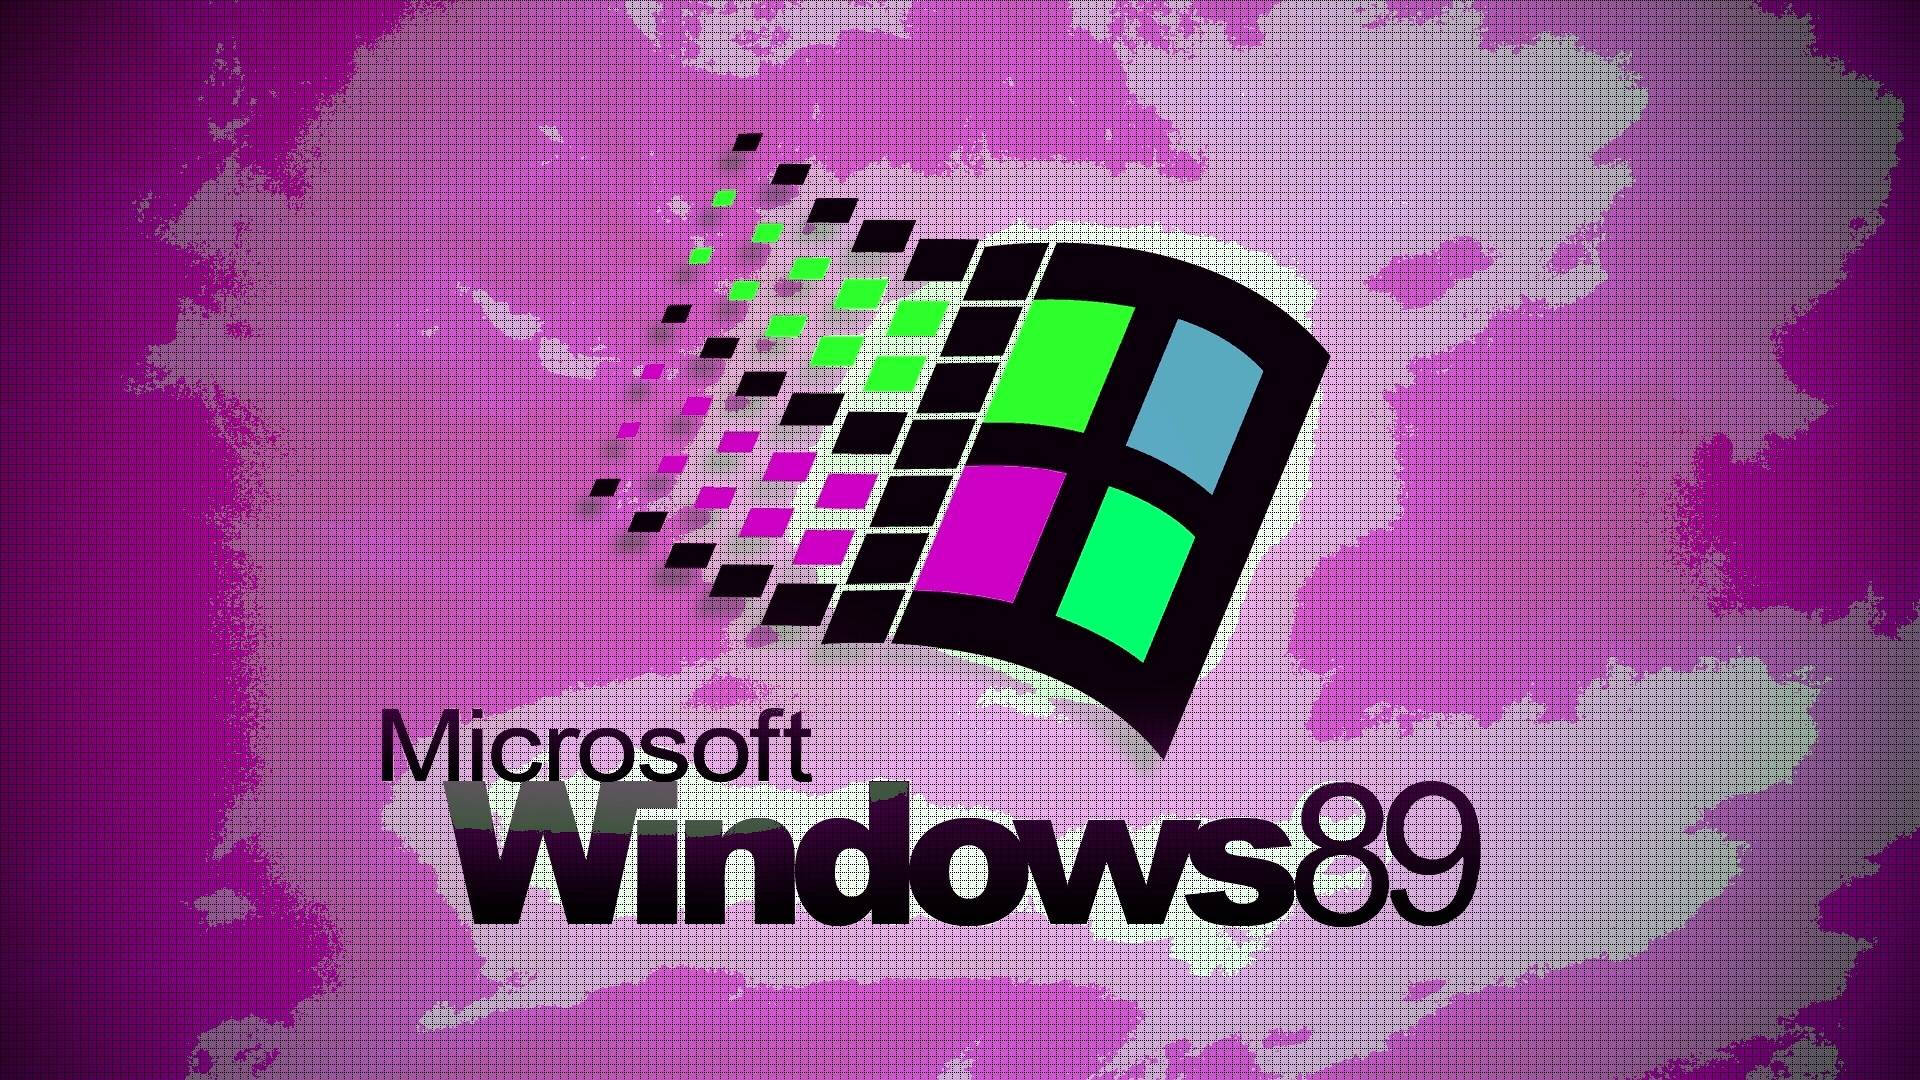 Windows 98 Wallpaper for FREE